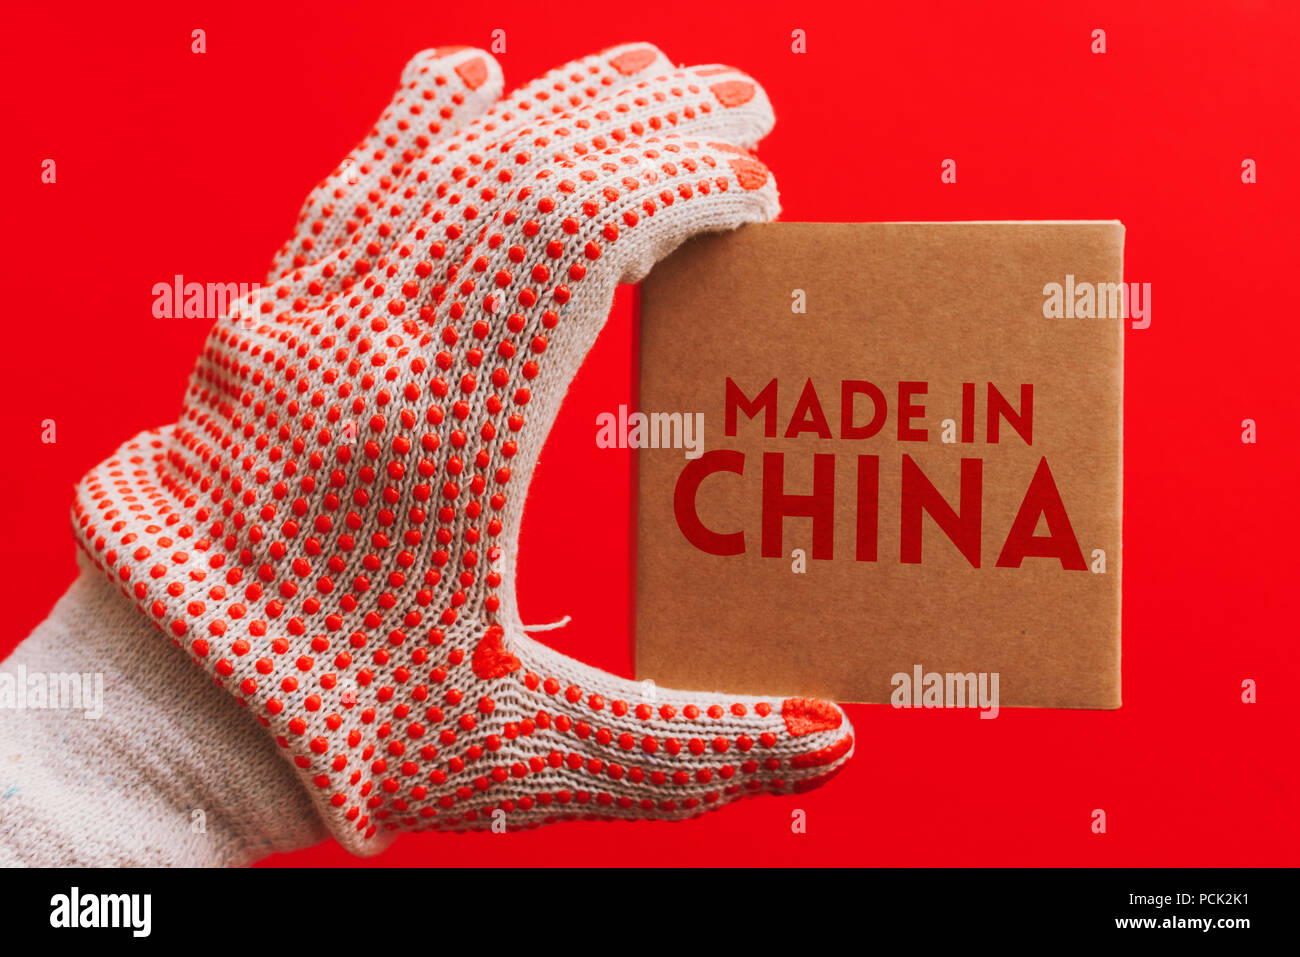 Топ 5 китайских. Маде ин Китай. Made in China товары. Стикер made in China. Сделано в Китае.